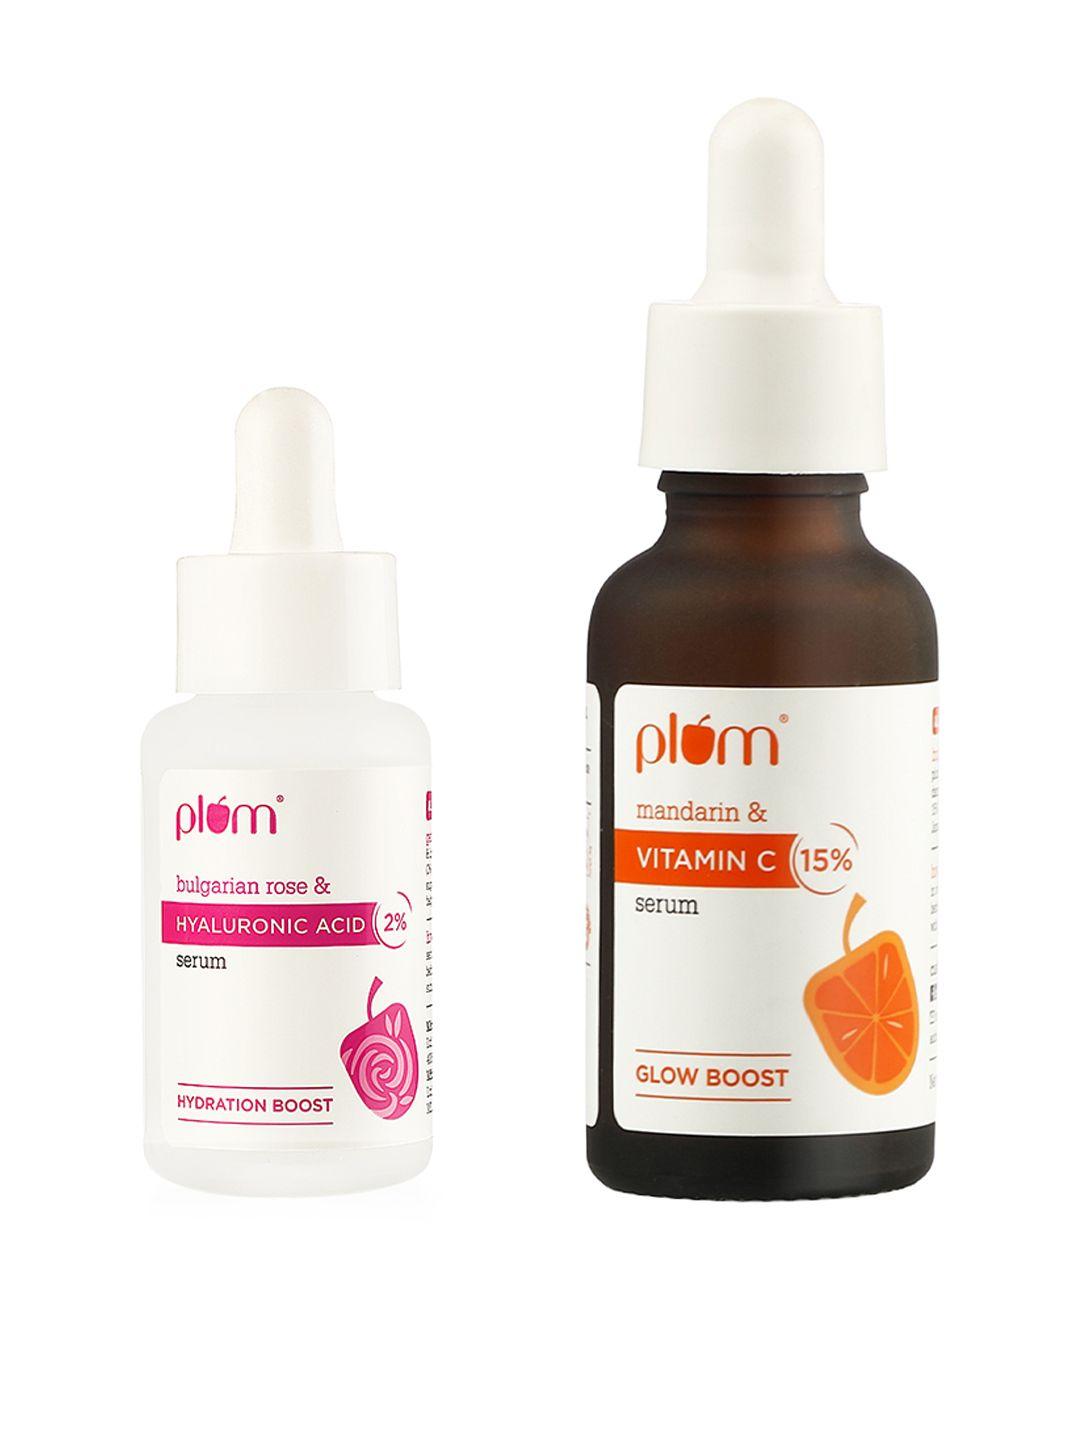 plum set of 15% vitamin c face serum with mandarin & 2% hyaluronic acid face serum